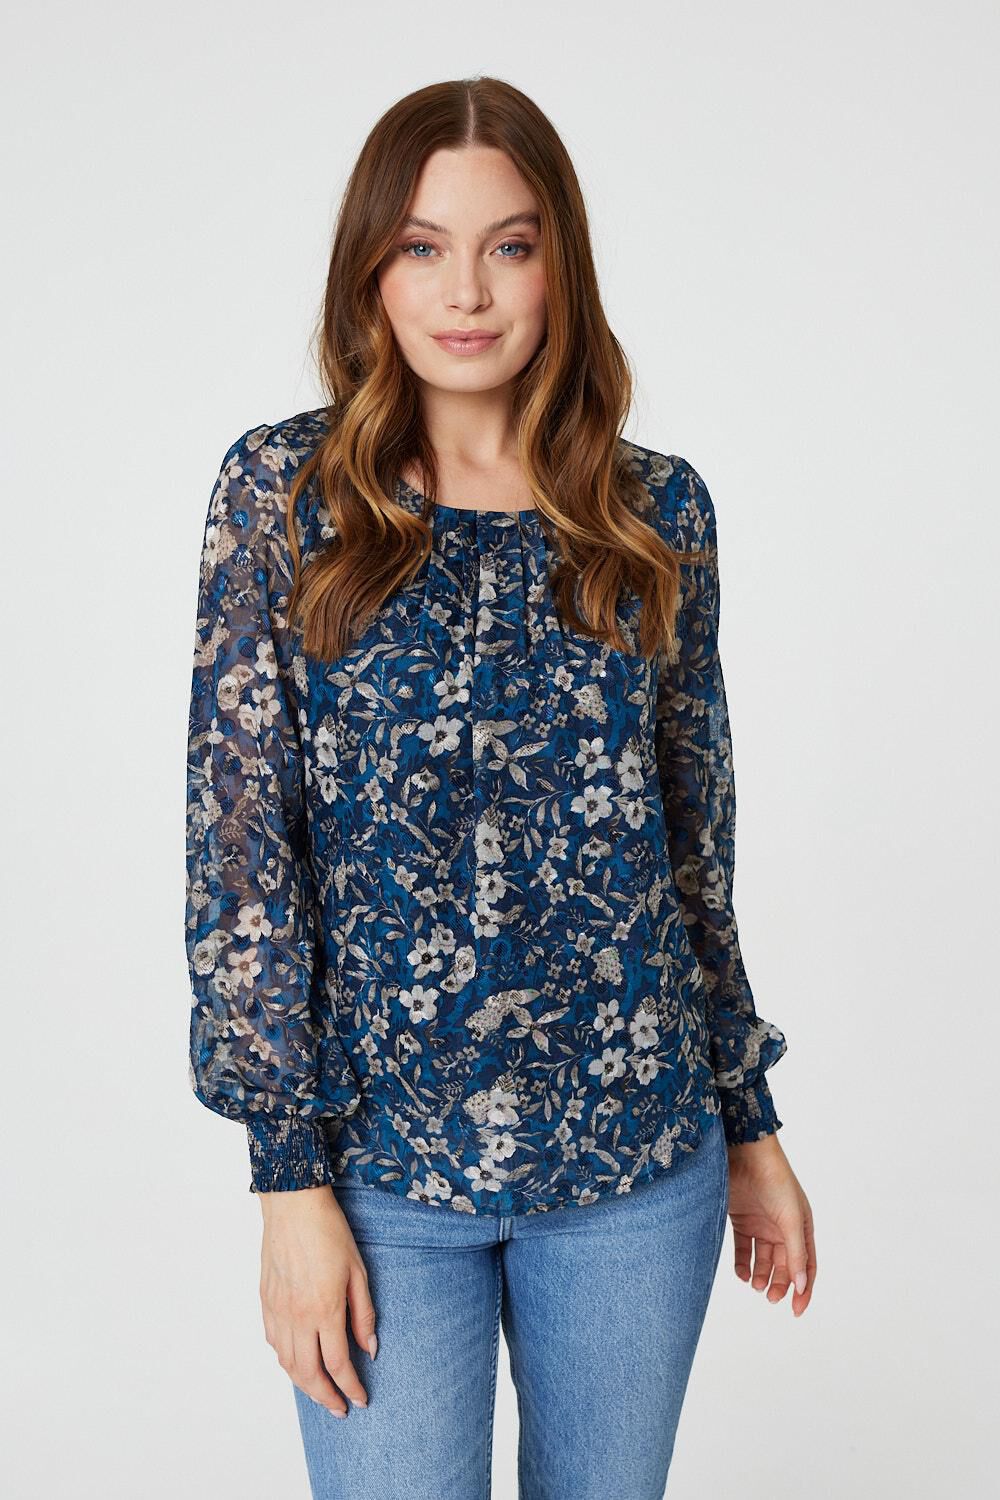 Izabel London Blue - Floral Long Sleeved Blouse Top, Size: 10